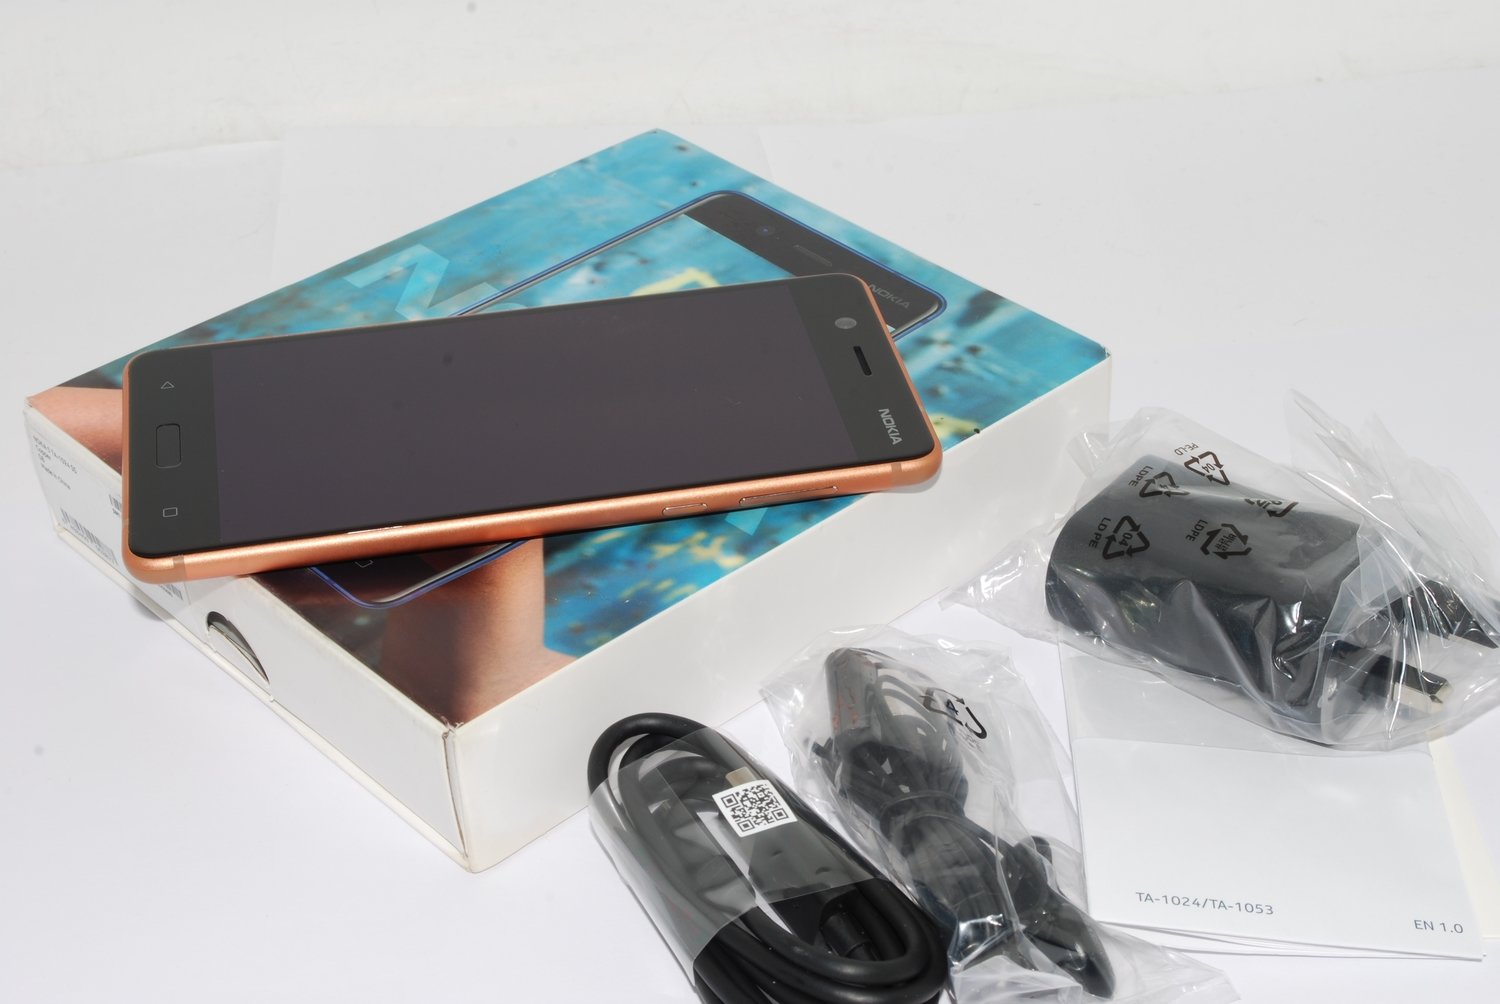 Nokia 5 Smartphone 5.2" 16GB 13MP Android 7.1 Copper Unlocked Sim-free #